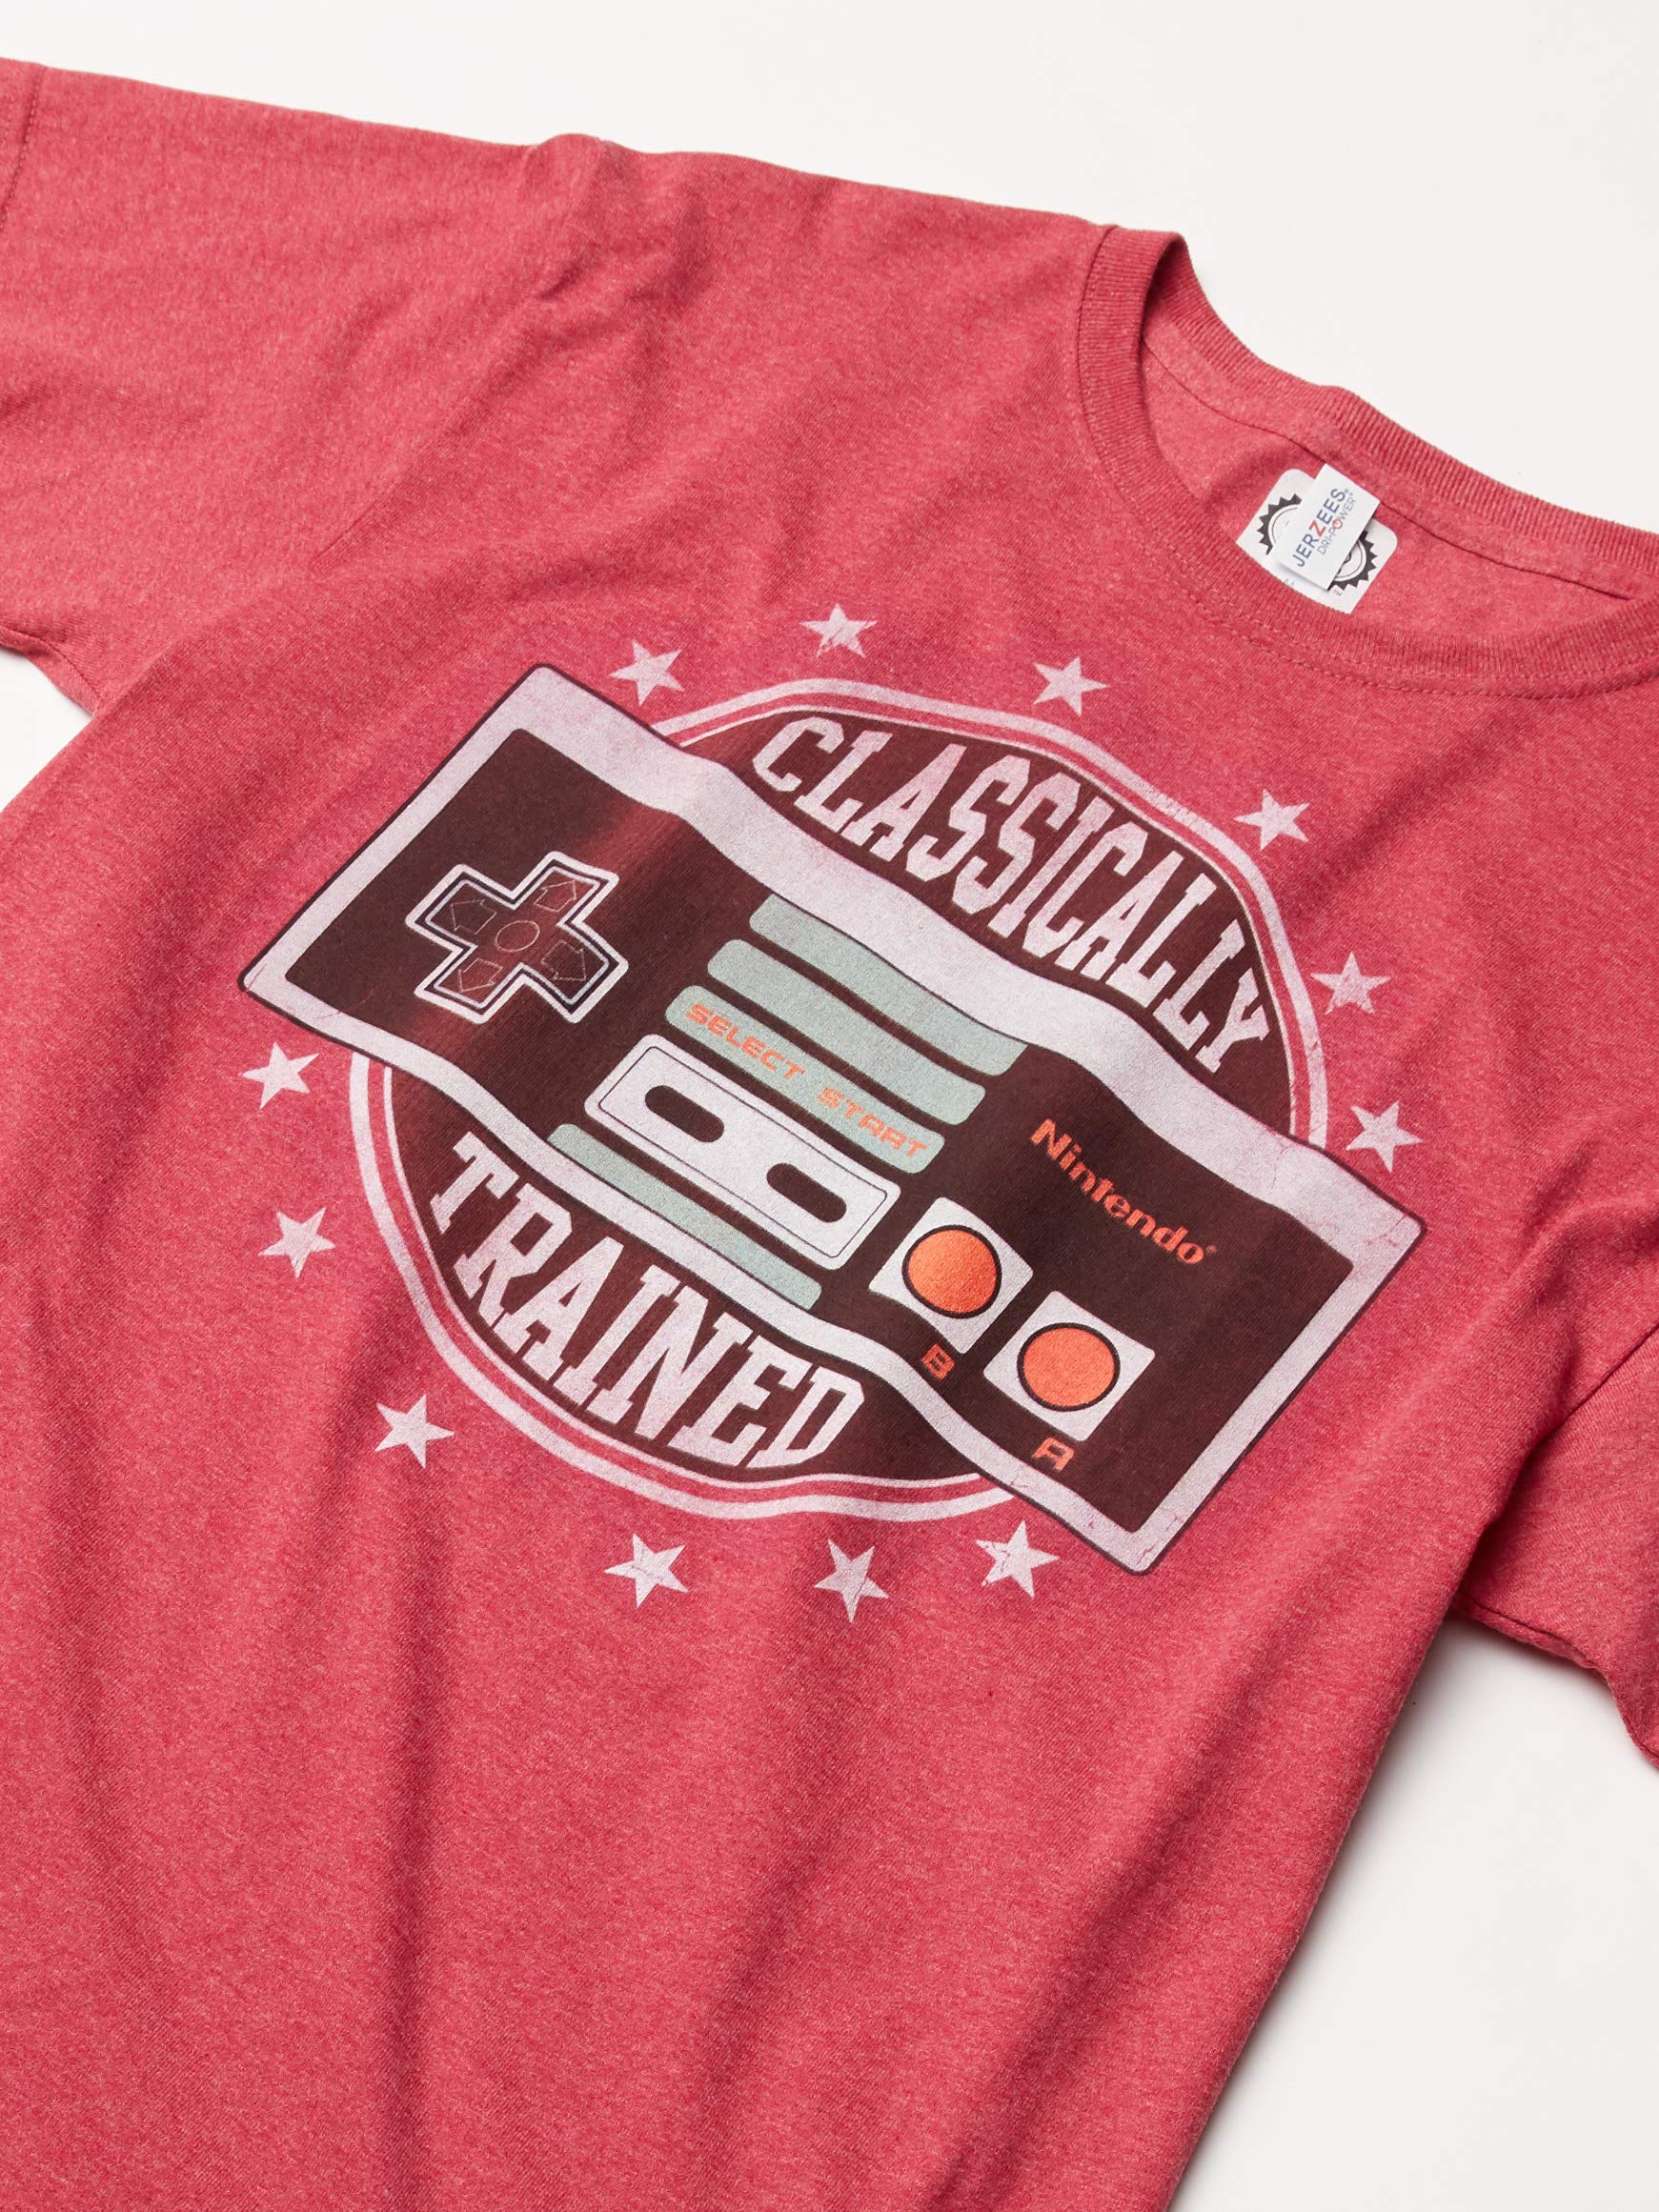 Nintendo Men's Classically Trained T-Shirt